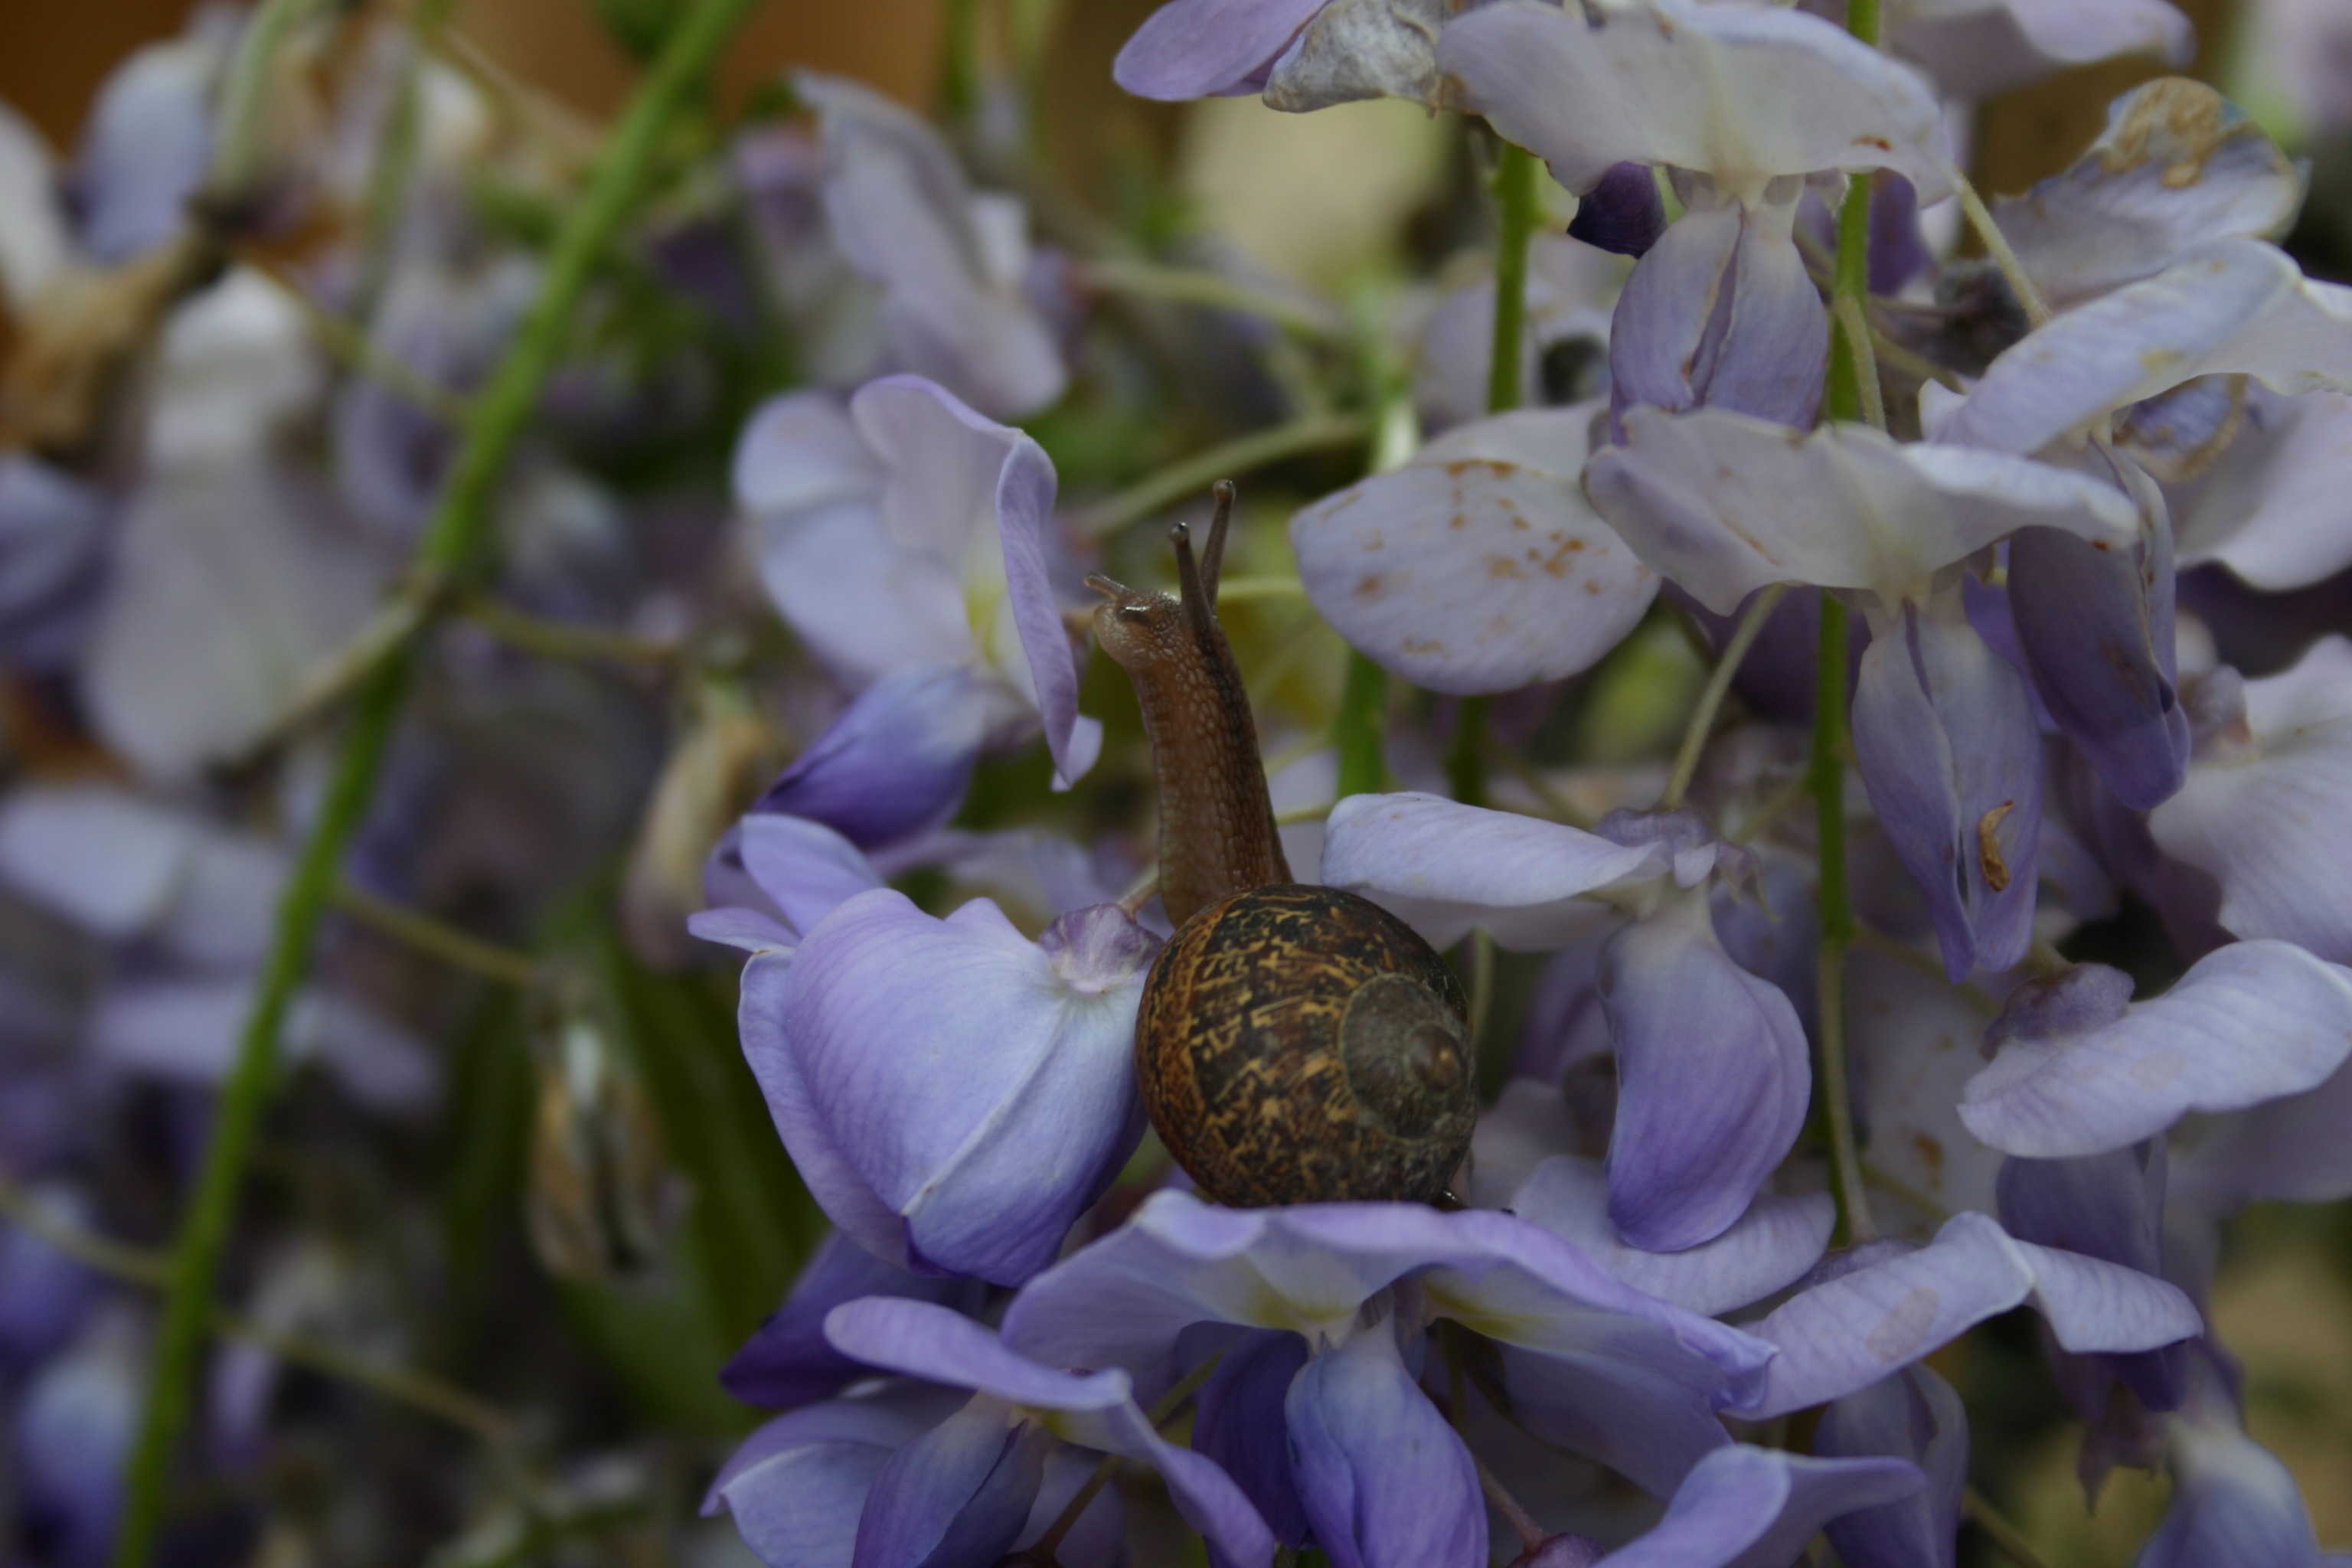 A snail checks out the purple wisteria flowers. 